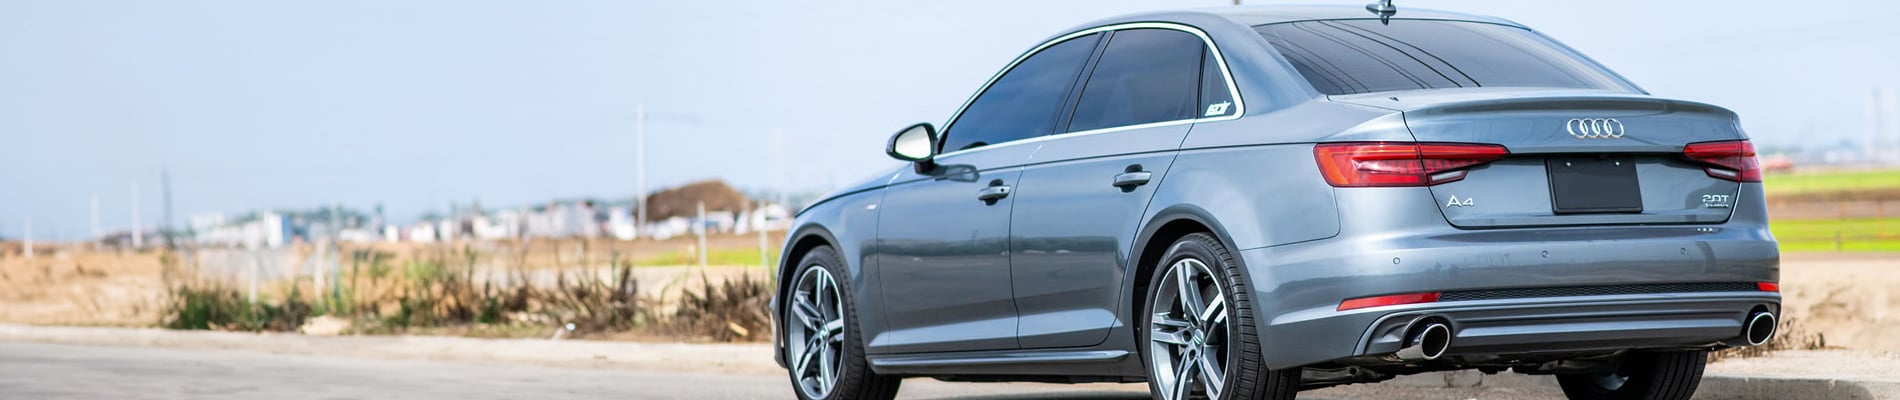 Audi A4 Accessories, Aftermarket Parts, Mods & Upgrades - AutoAccessoriesGarage.com